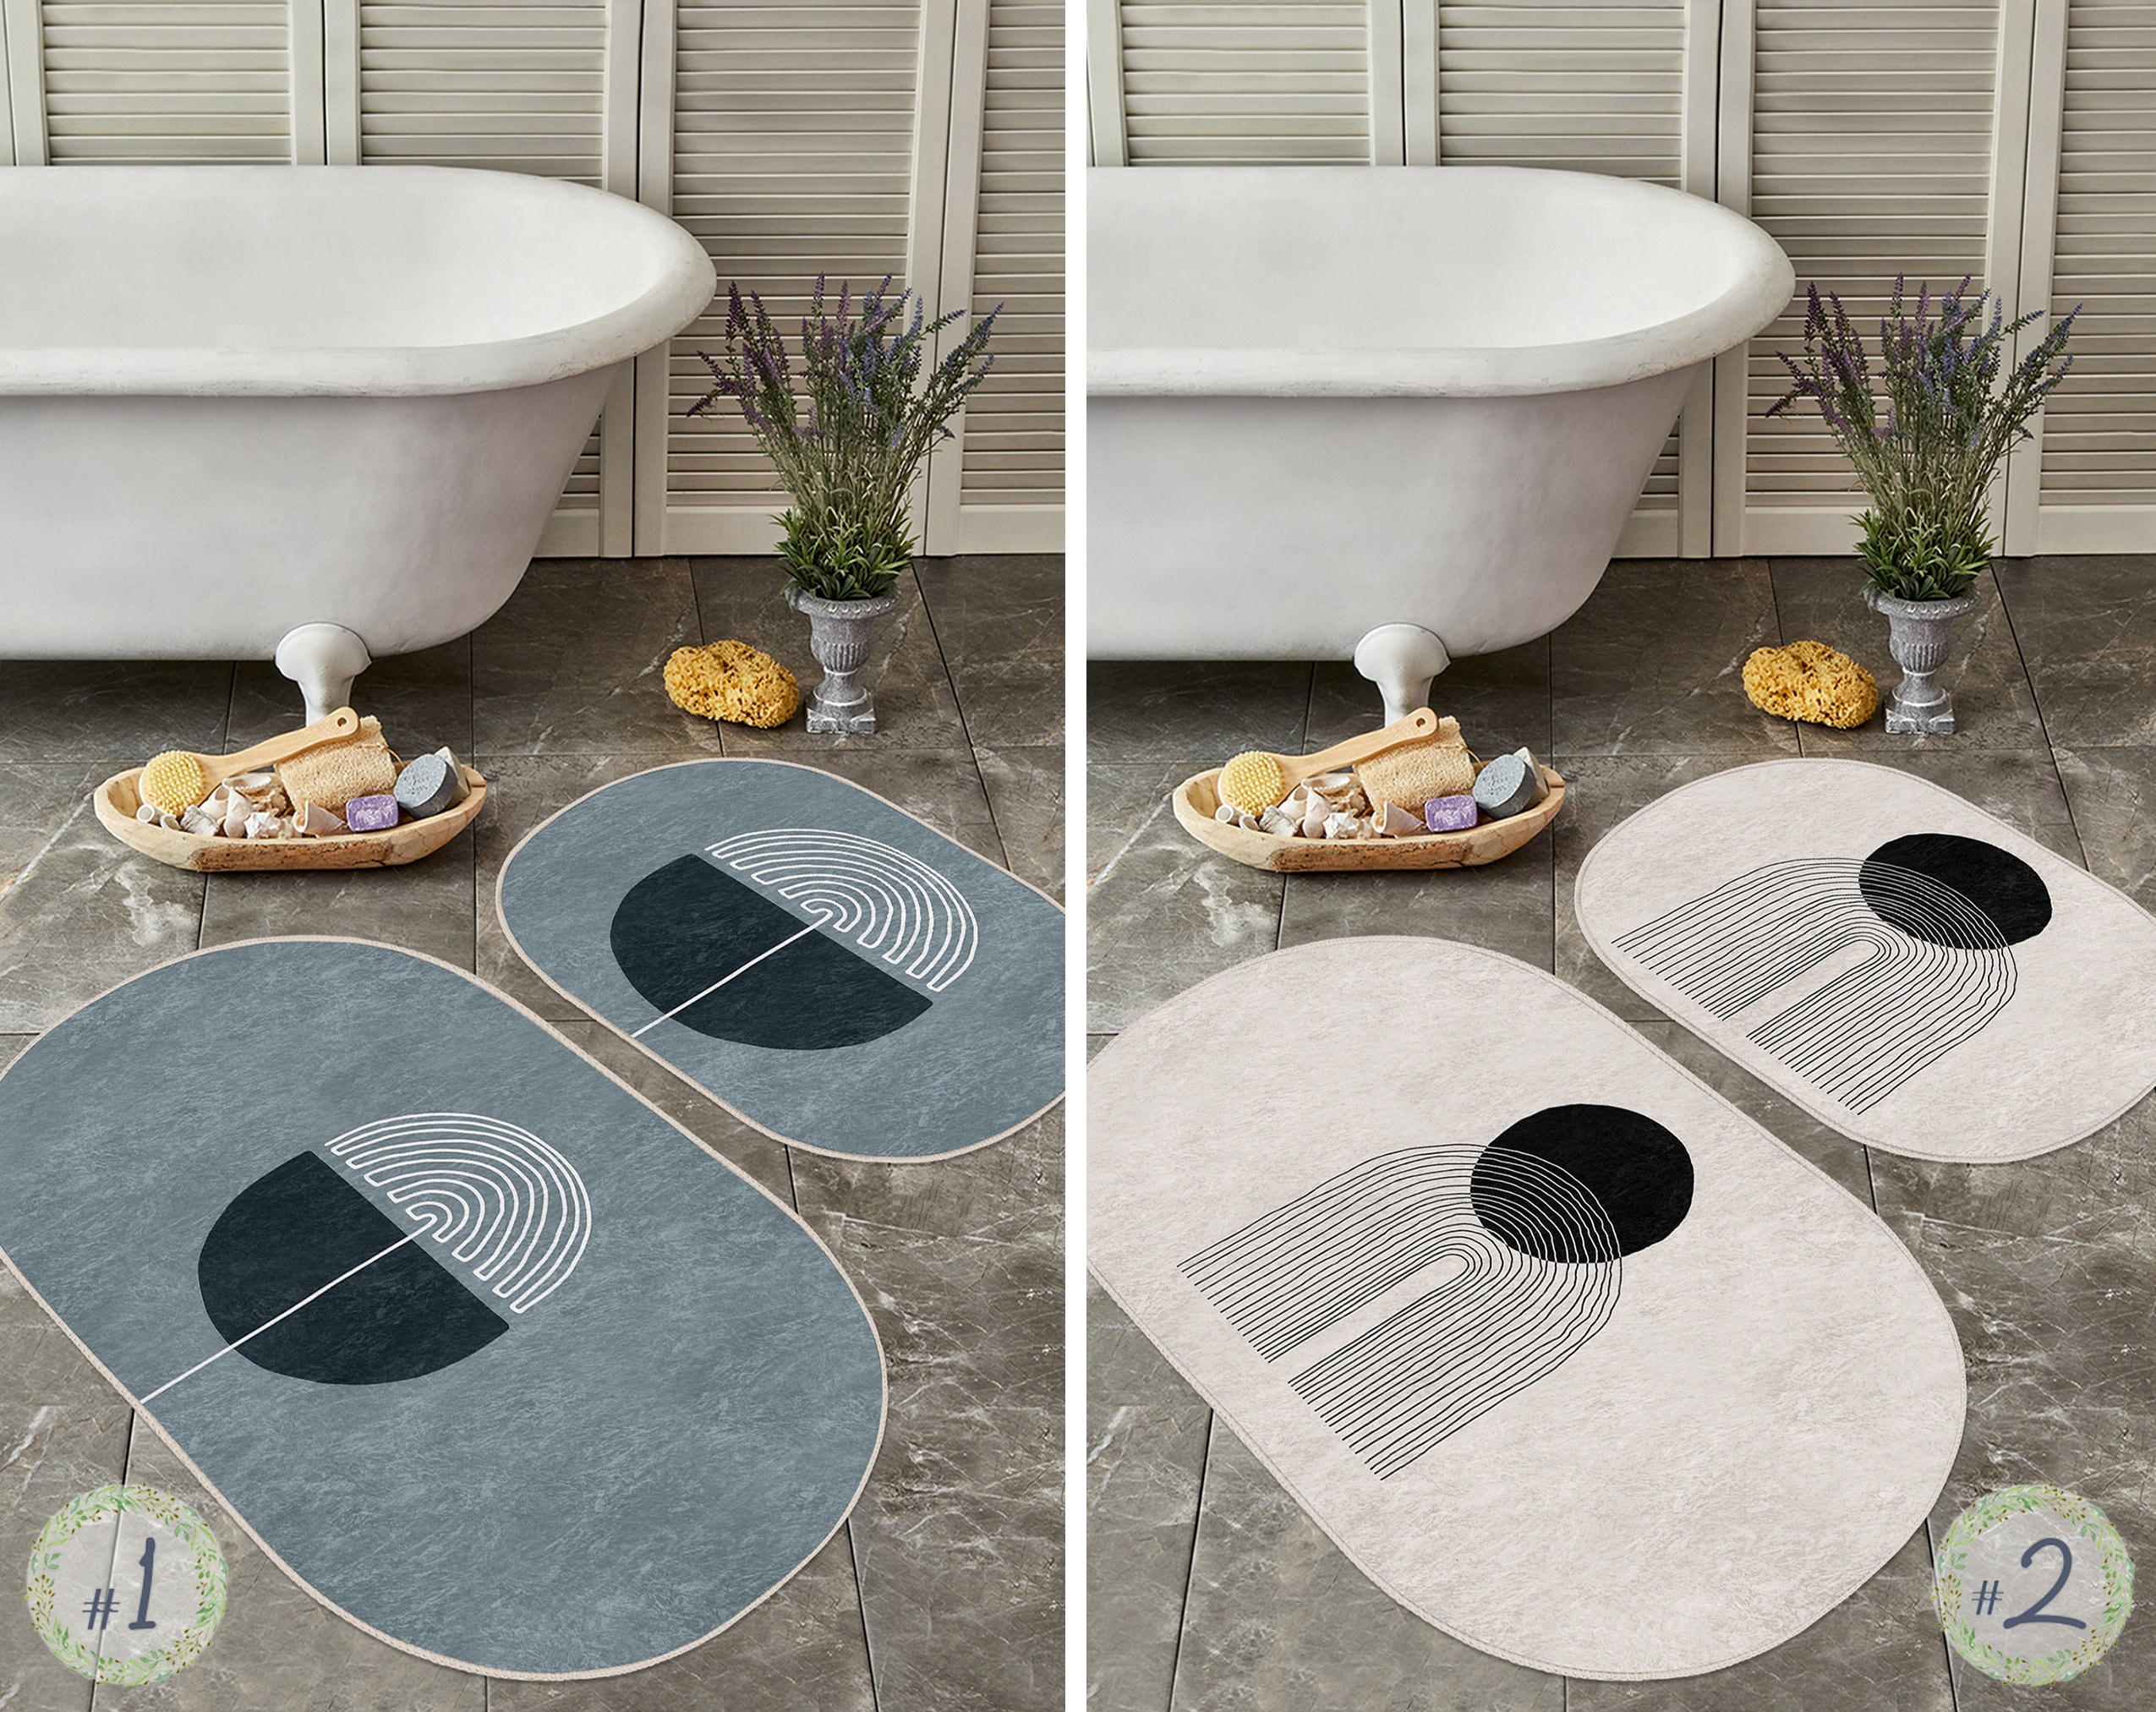 mDesign Striped Microfiber Non-Slip Bathroom Mat Rug for Vanity Bathtub Shower Dorm Room Set of 3 Gray Yellow